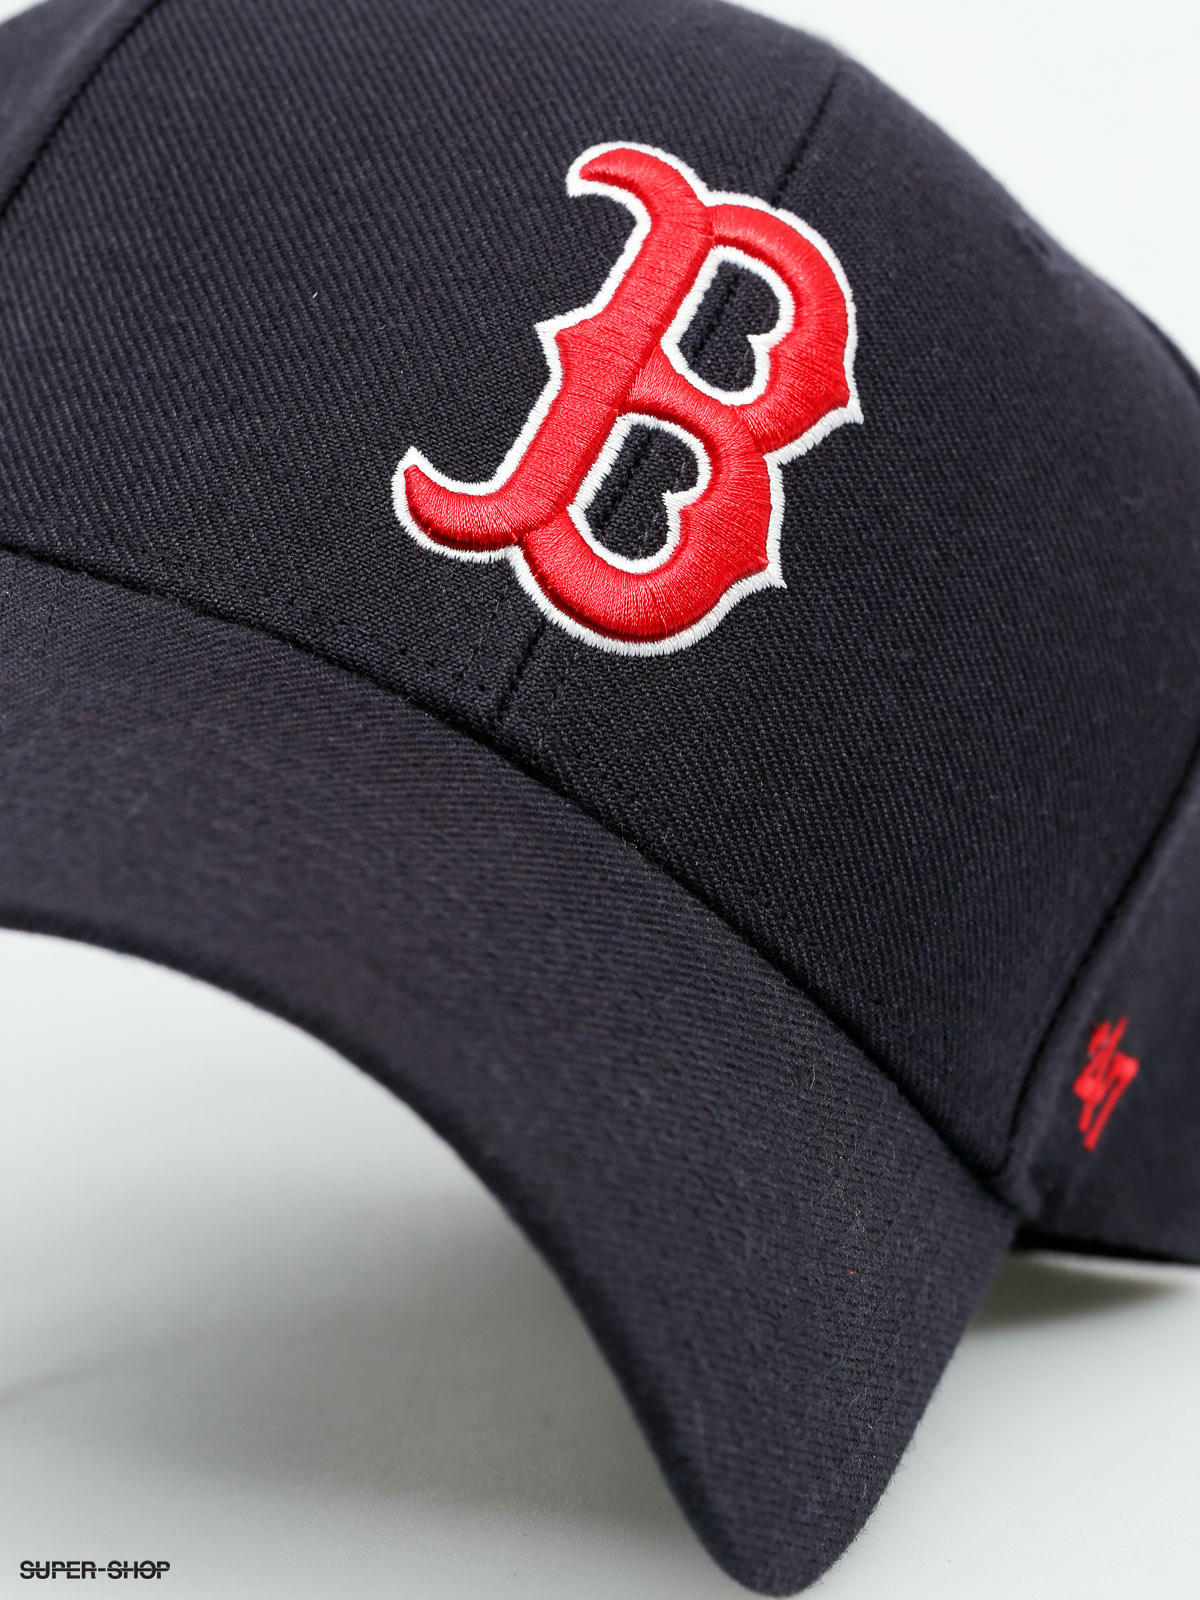 47 Brand Cap Boston Red Sox ZD (navy)